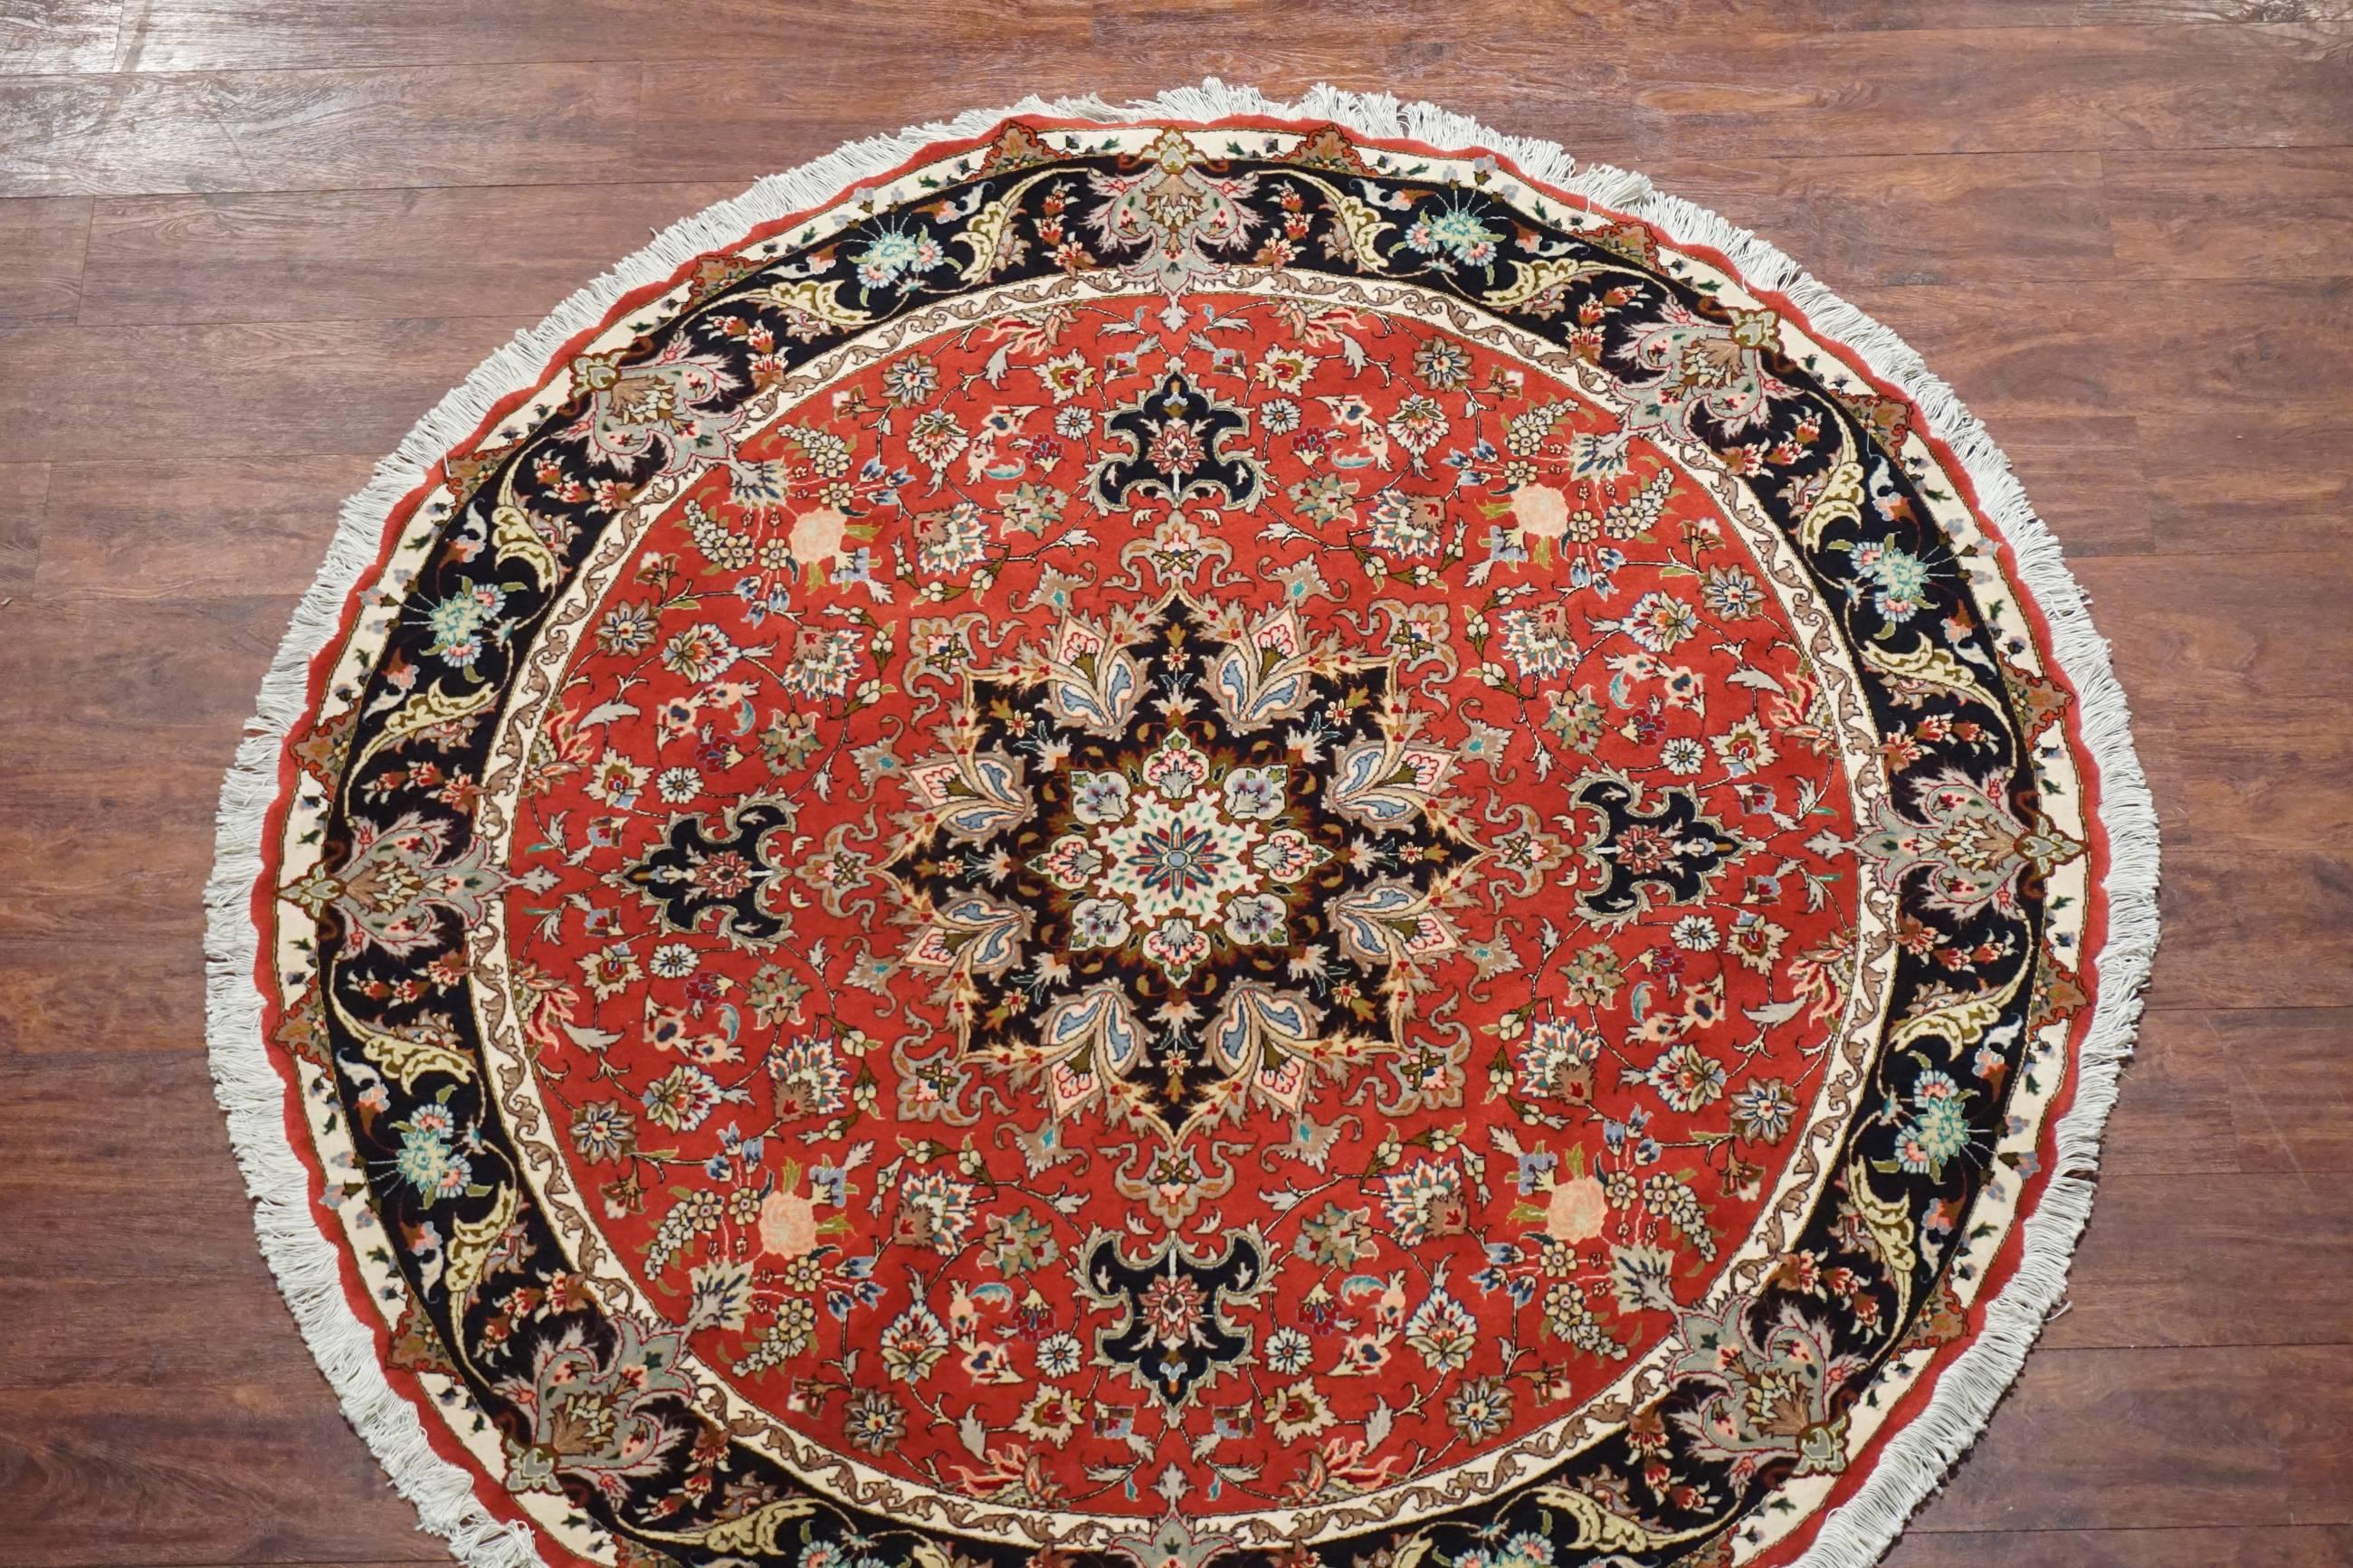 Fine round Persian Tabriz area rug,

1990

Measures: 5' 4